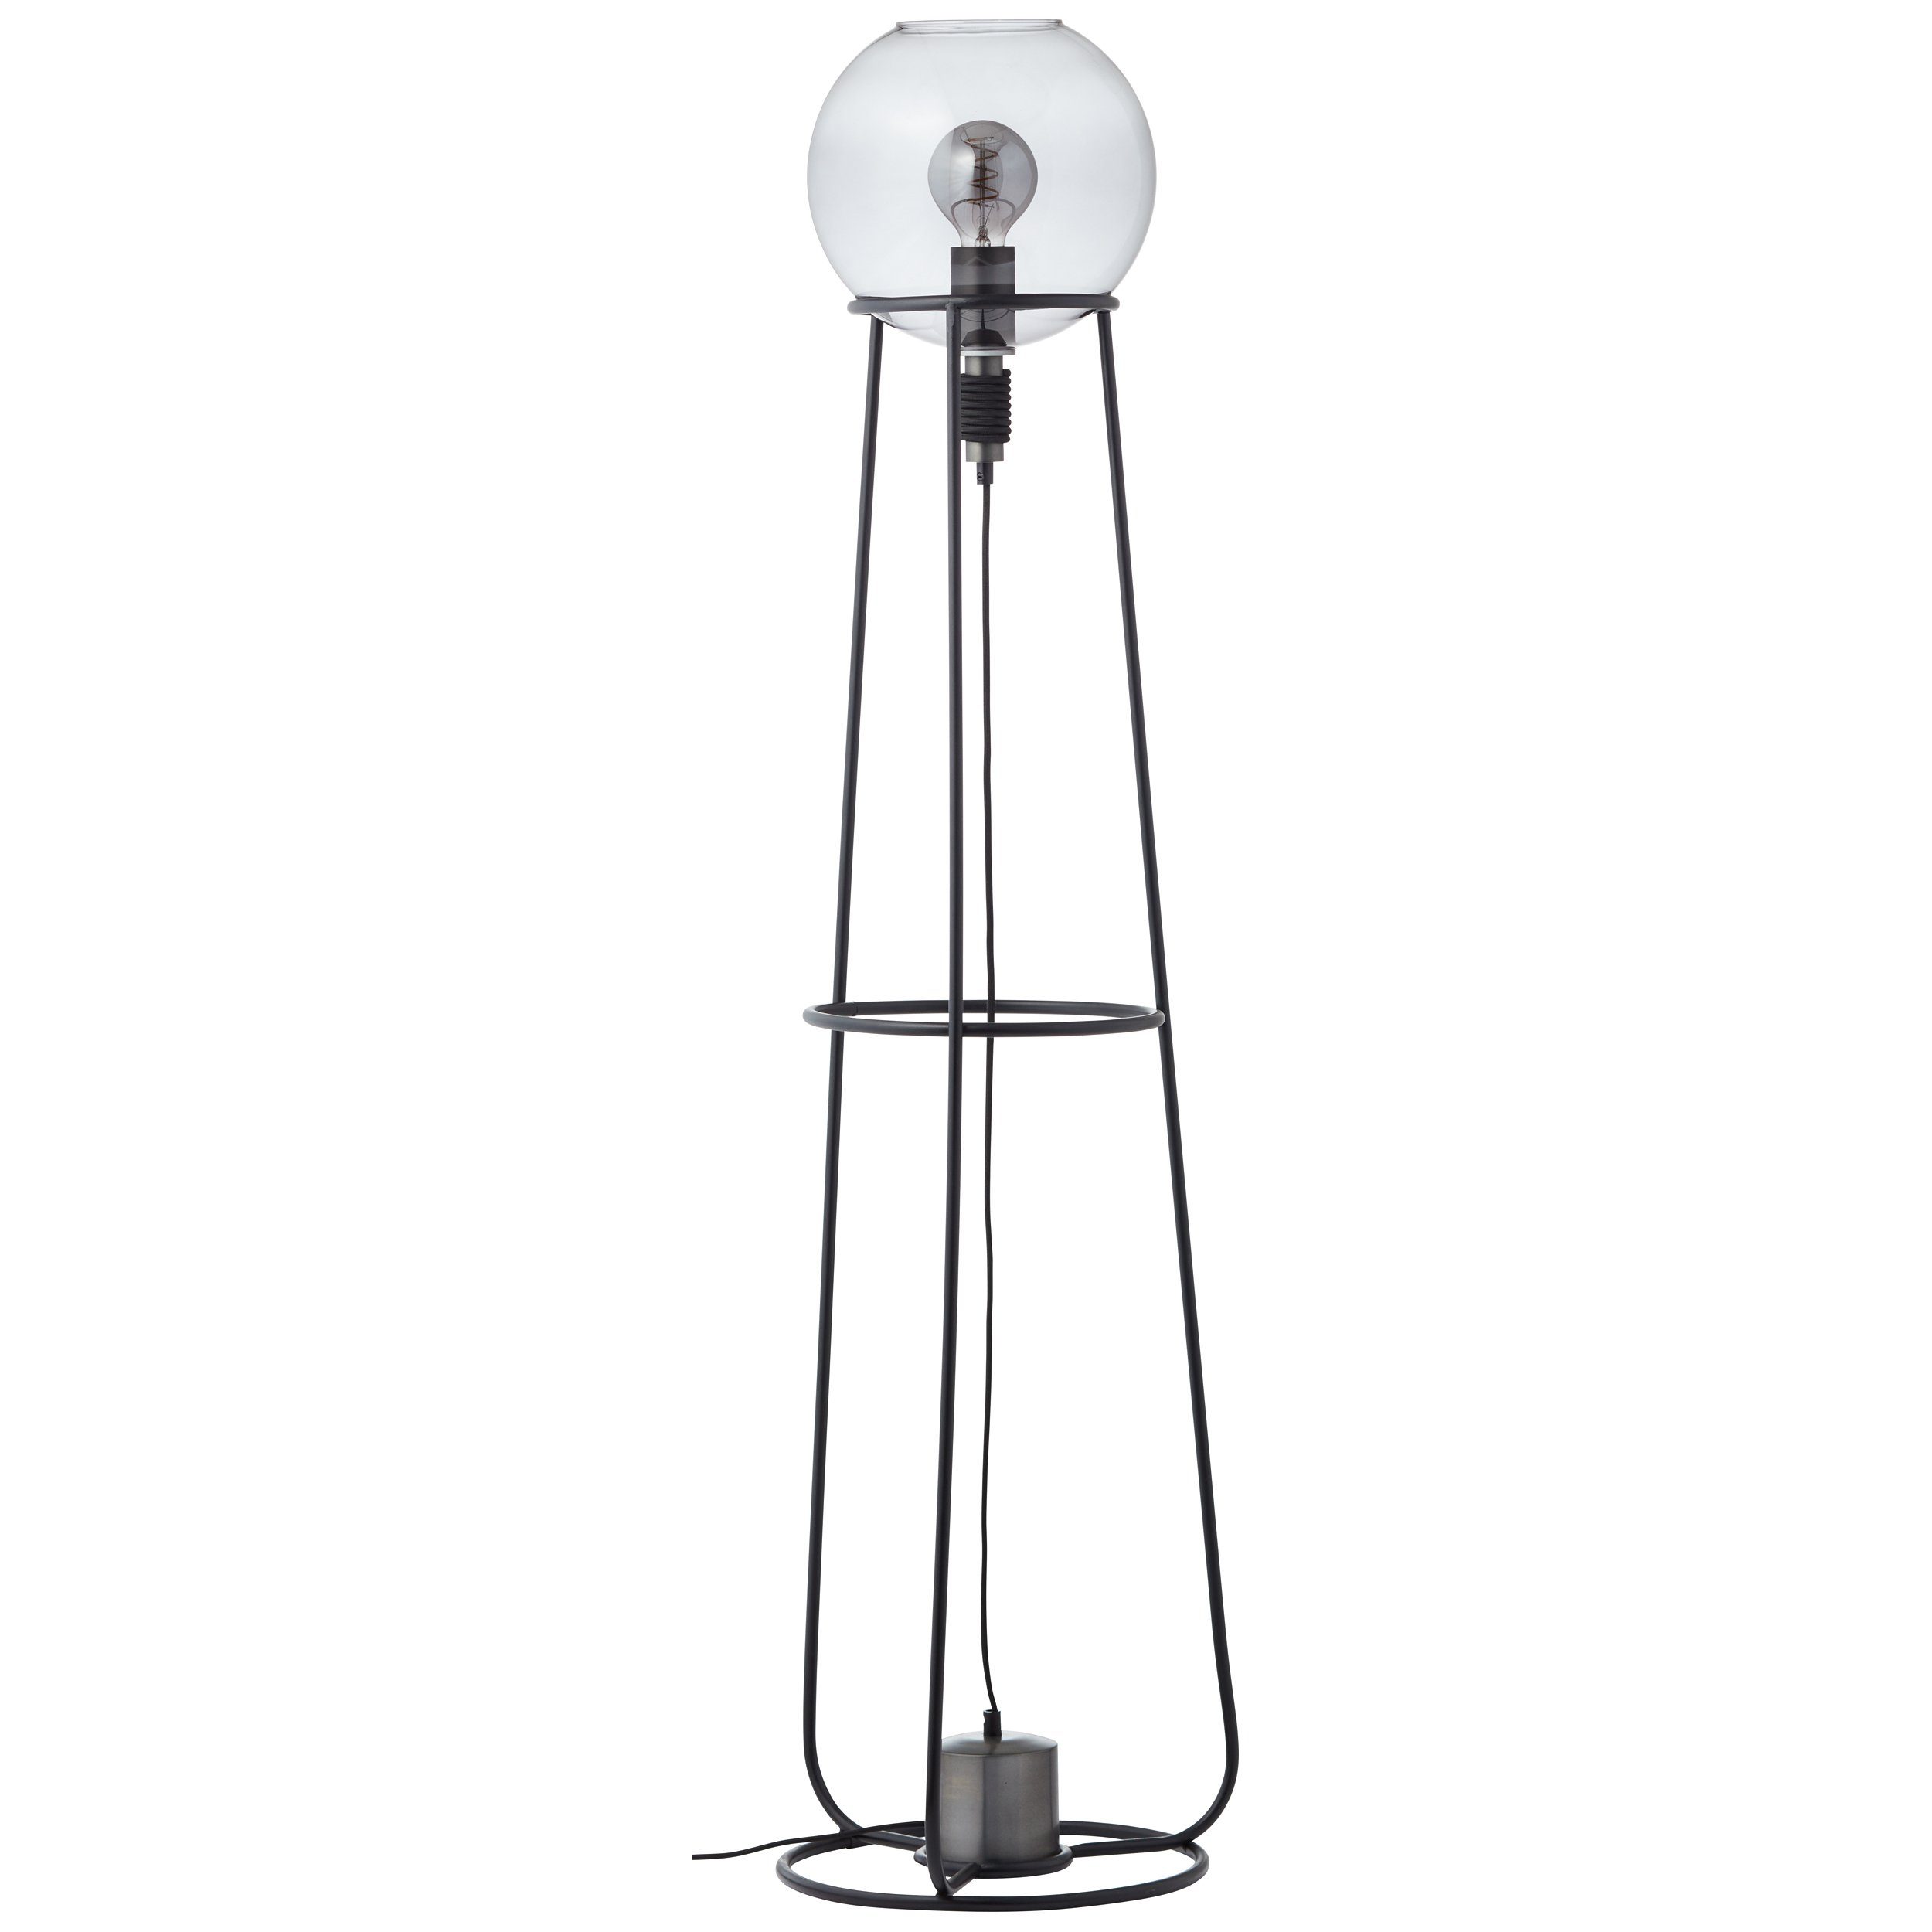 Brilliant Stehlampe Pheme, Pheme Standleuchte W A60, 1x schwarz/silber, Metall/Glas, 1flg E27, 52